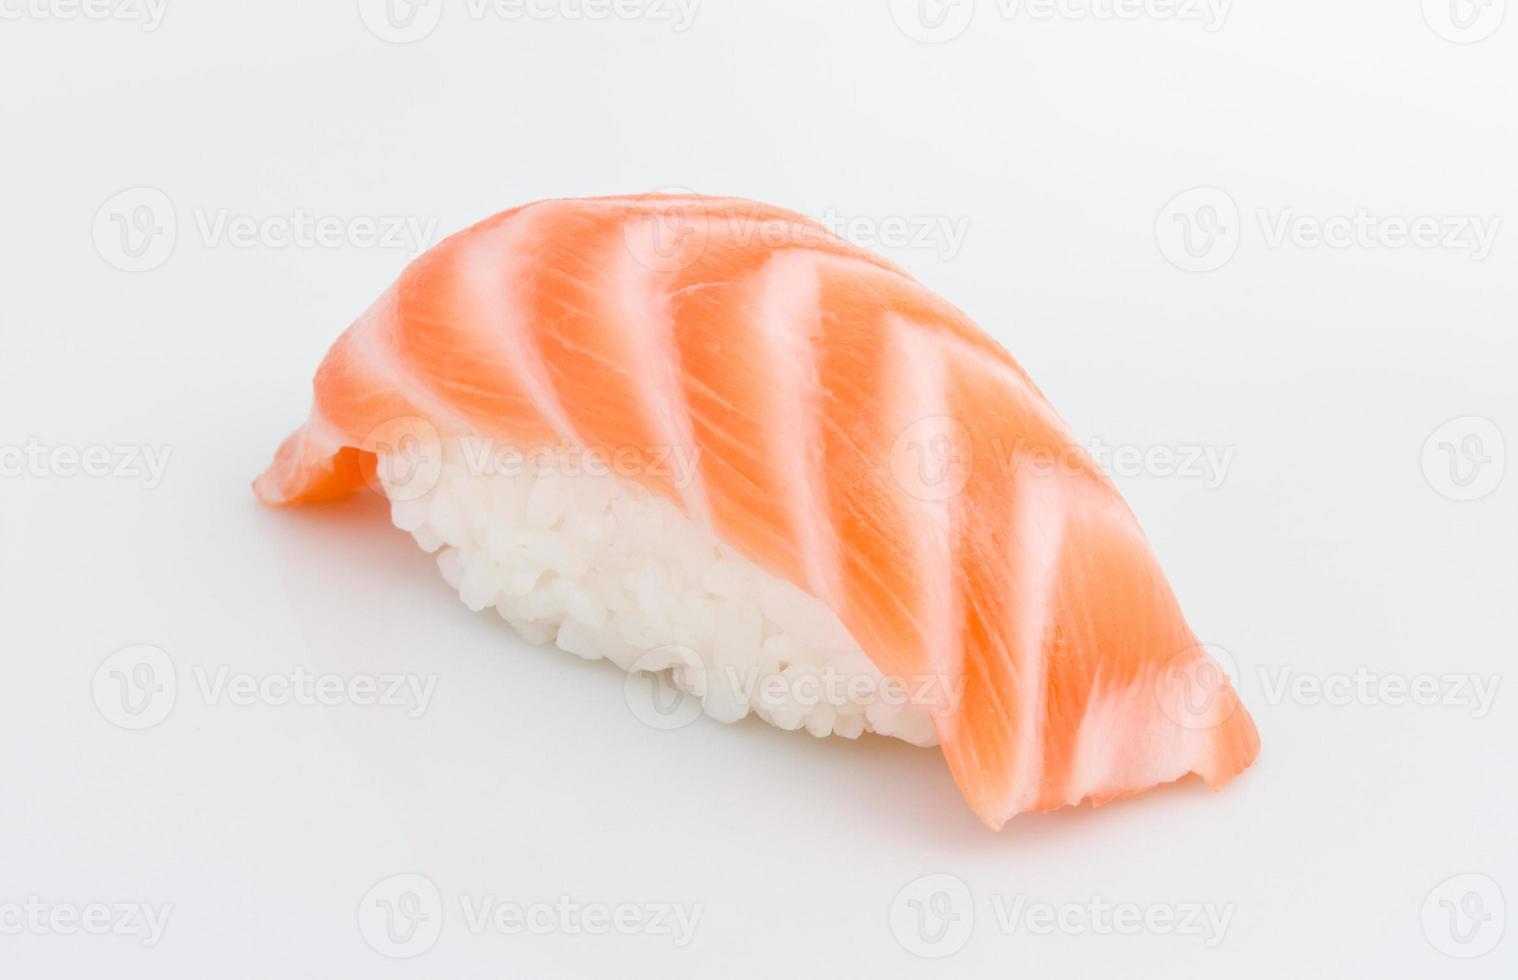 studiofotografering av japansk sushi vaki med lax på vit bakgrund foto